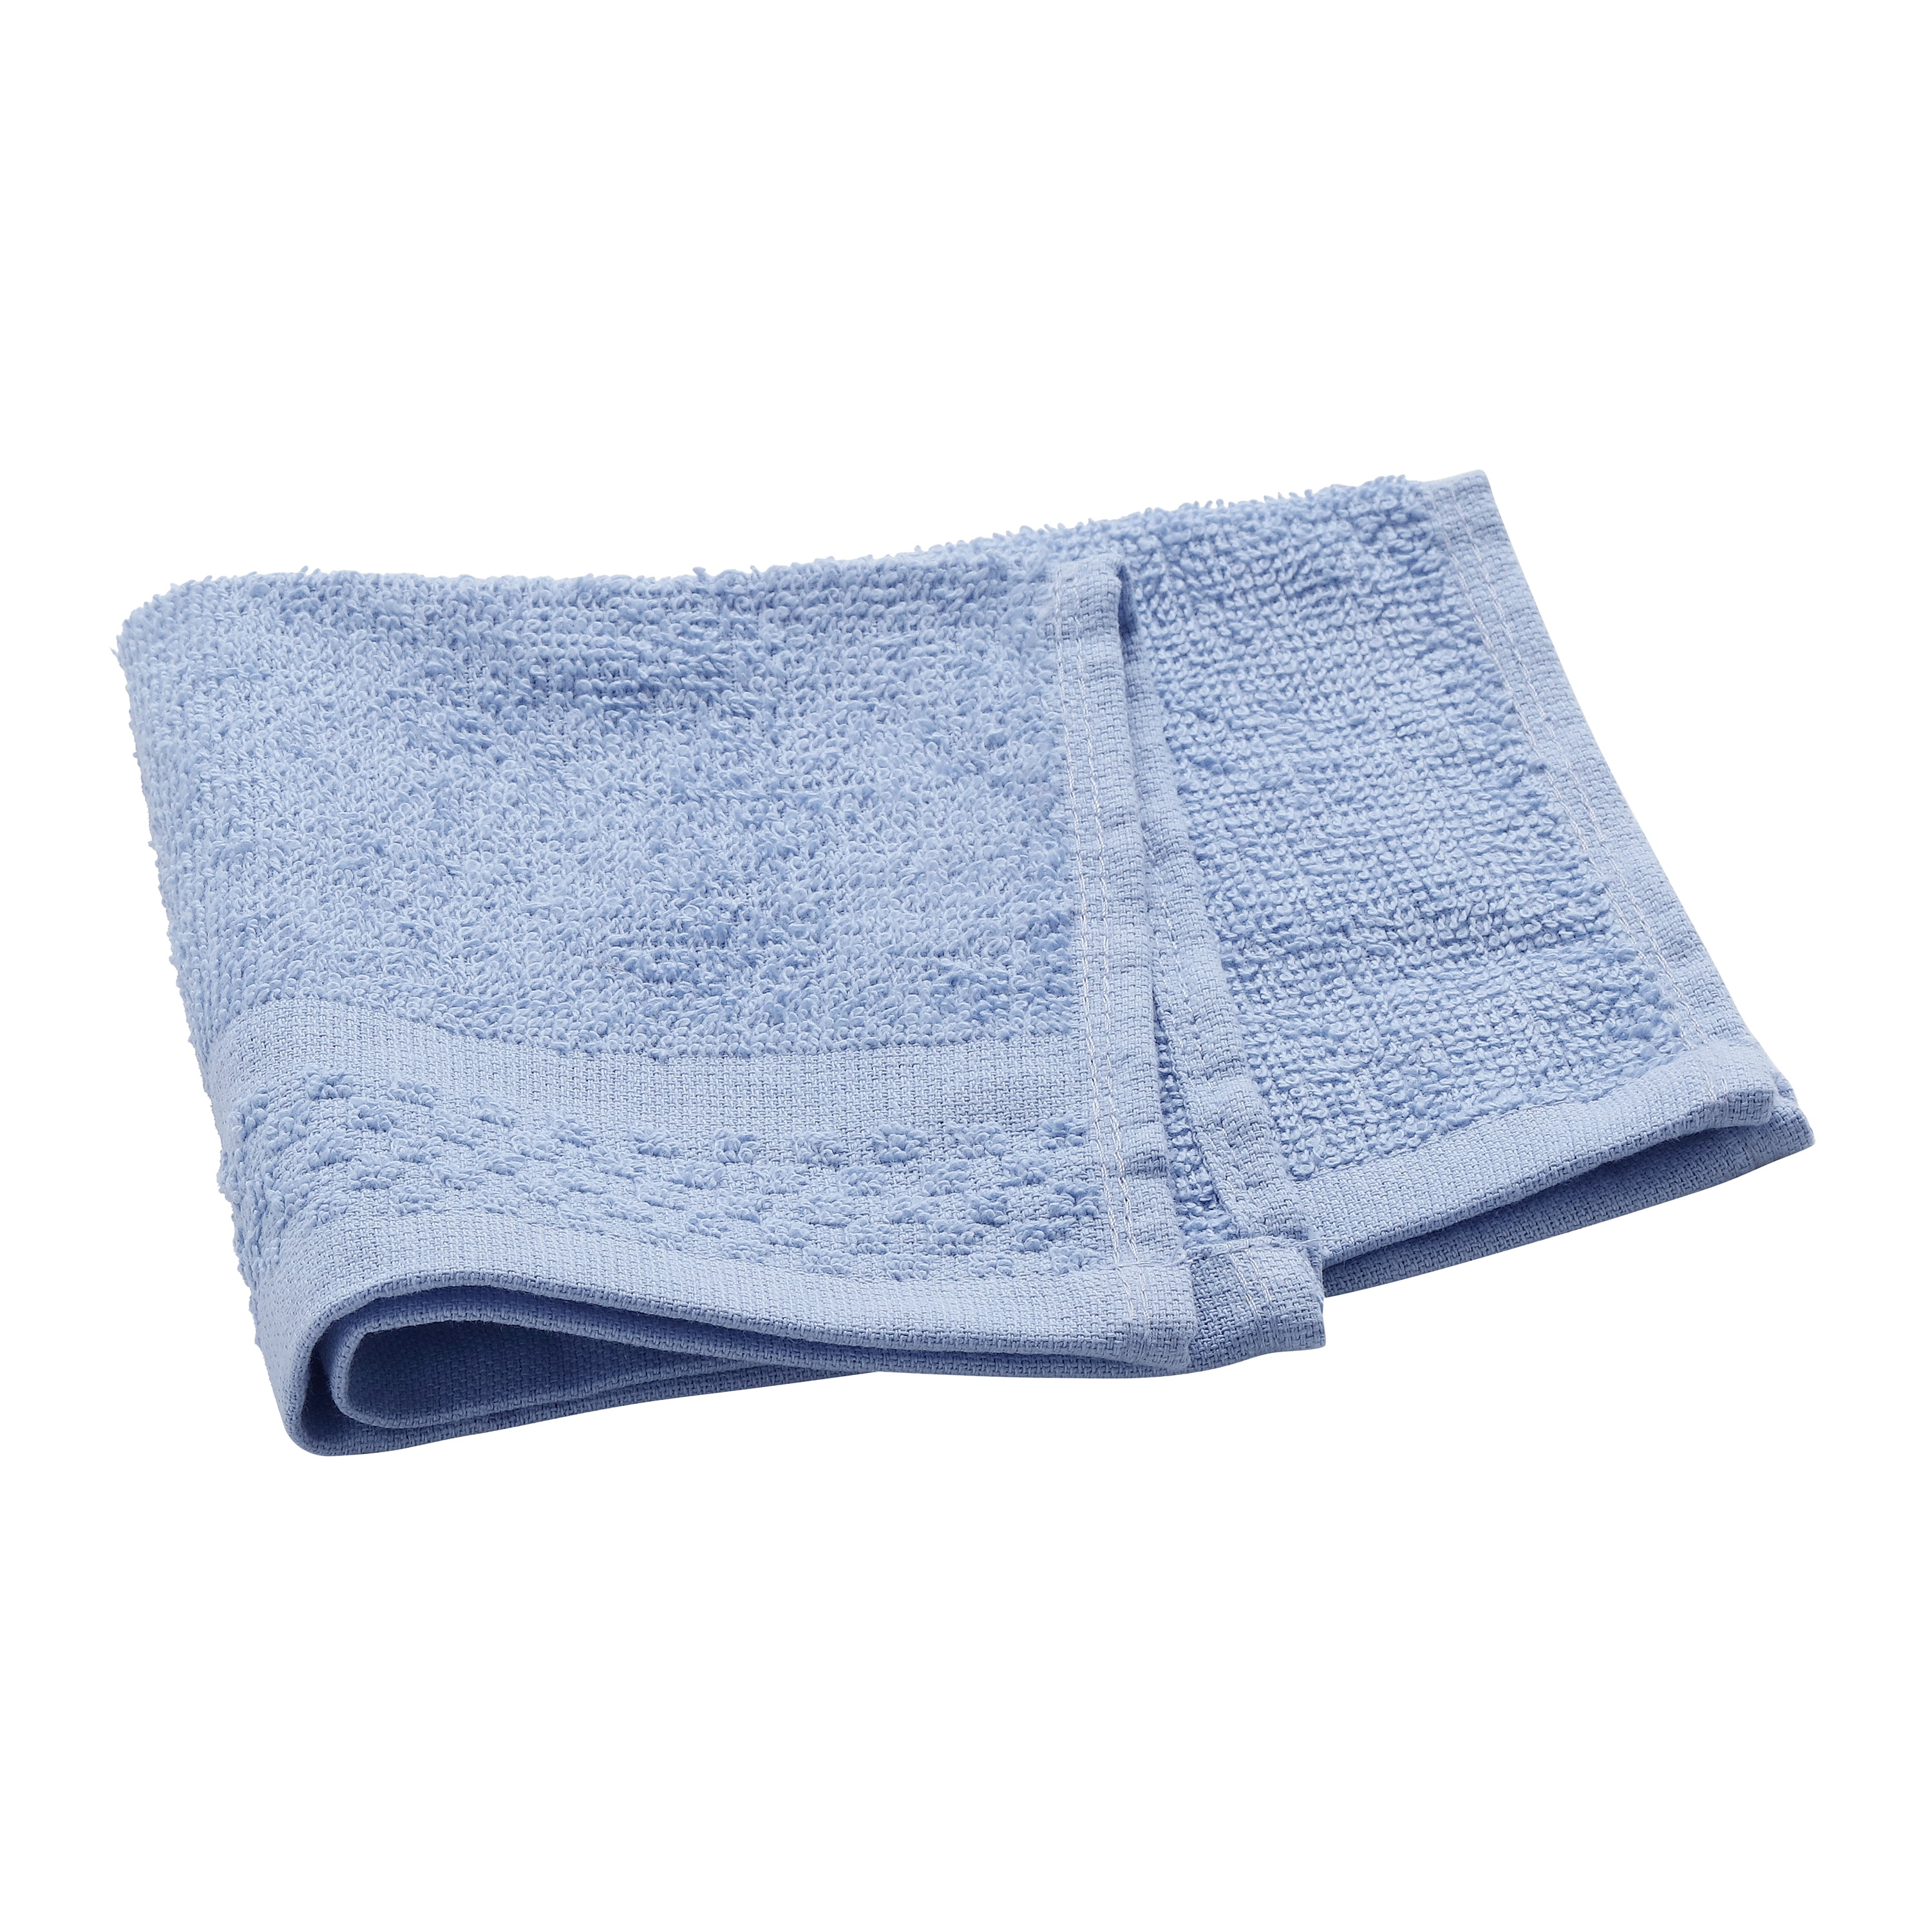 Mainstays 10 Piece Bath Towel Set with Upgraded Softness & Durability,  Office Blue